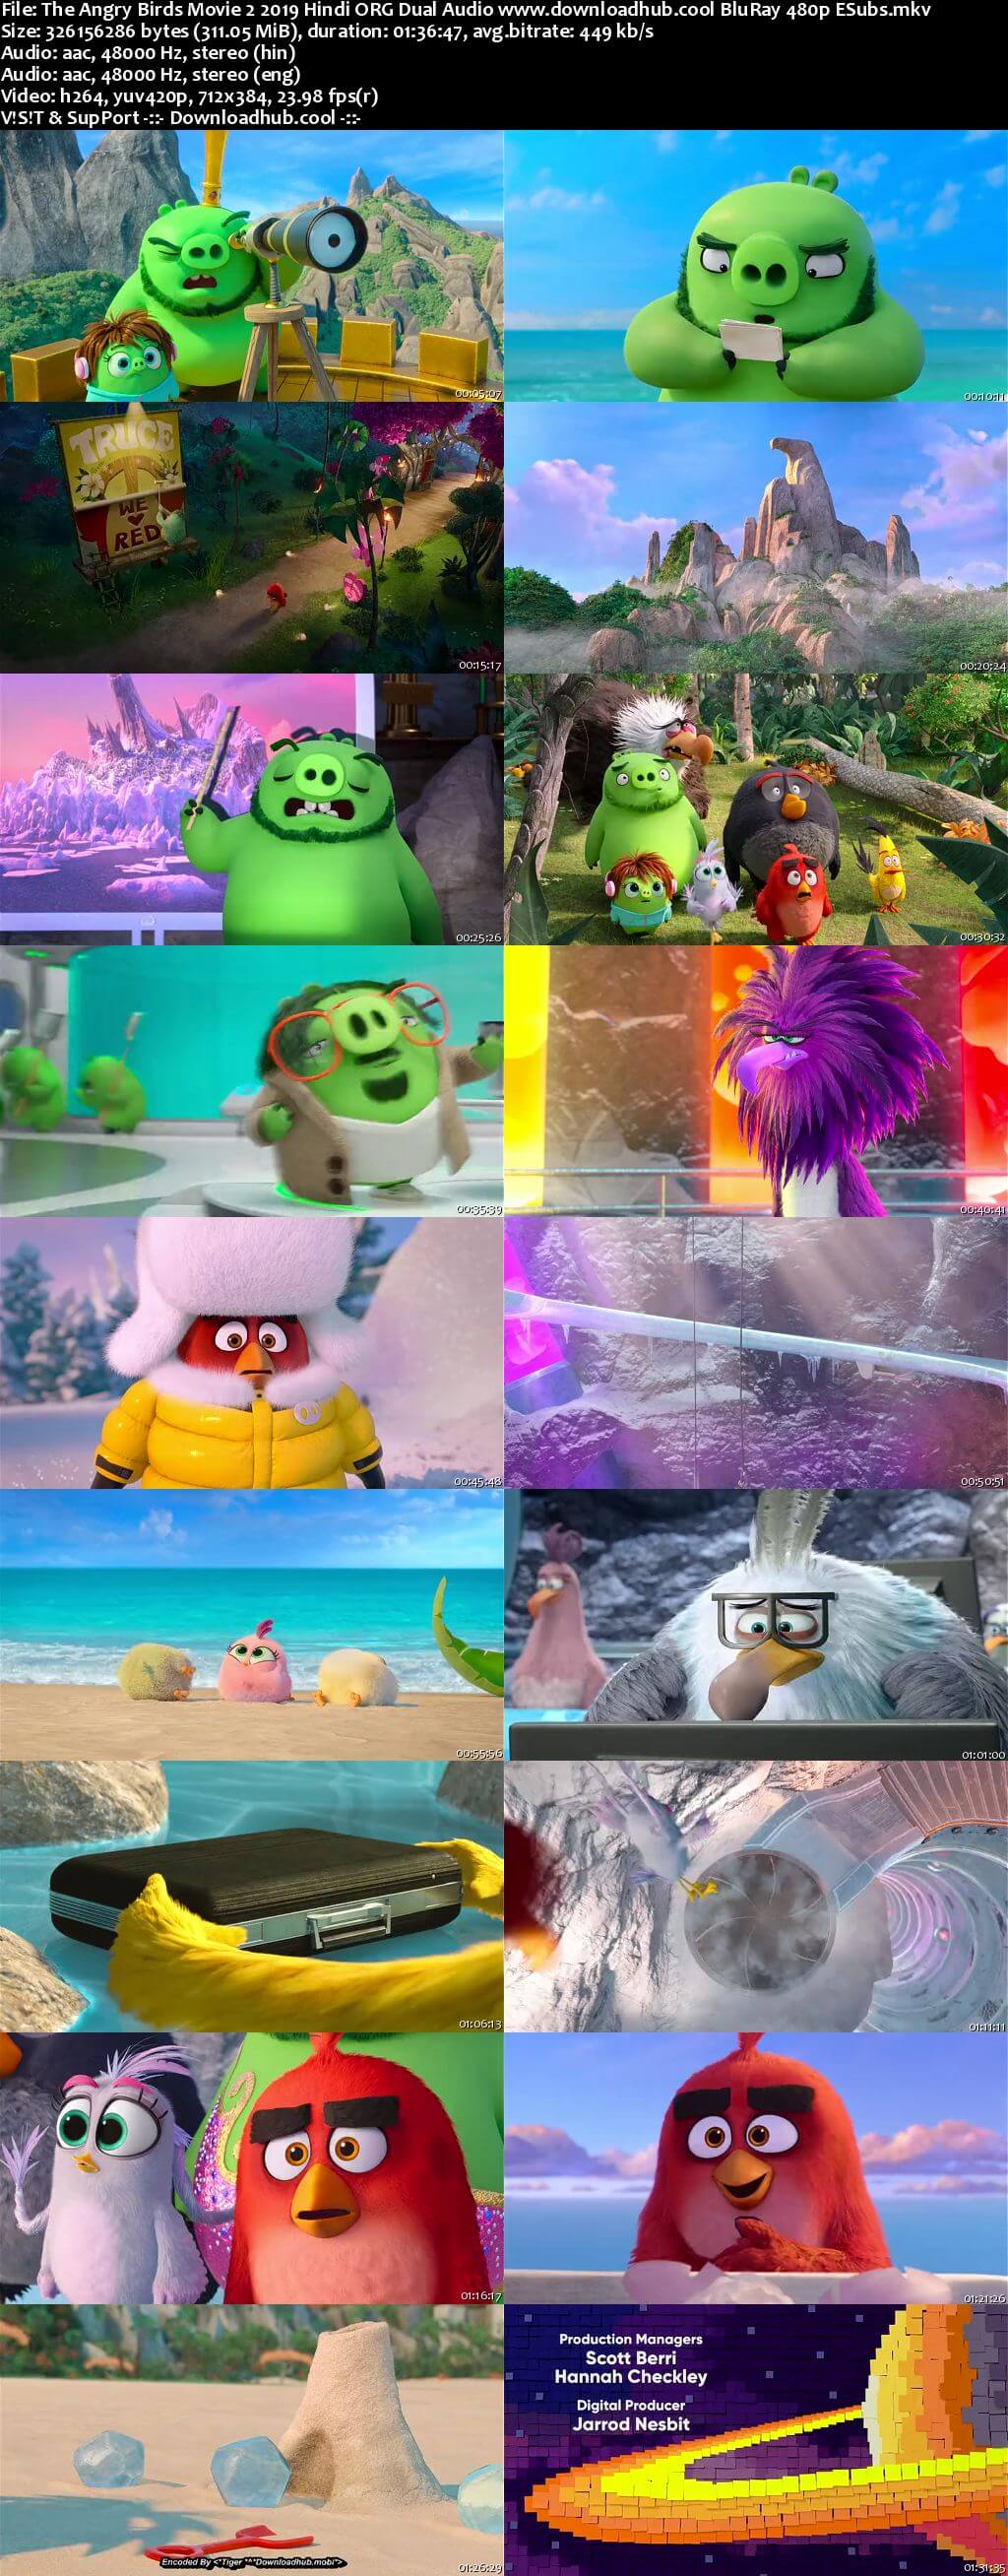 The Angry Birds Movie 2 2019 Hindi ORG Dual Audio 300MB BluRay 480p ESubs